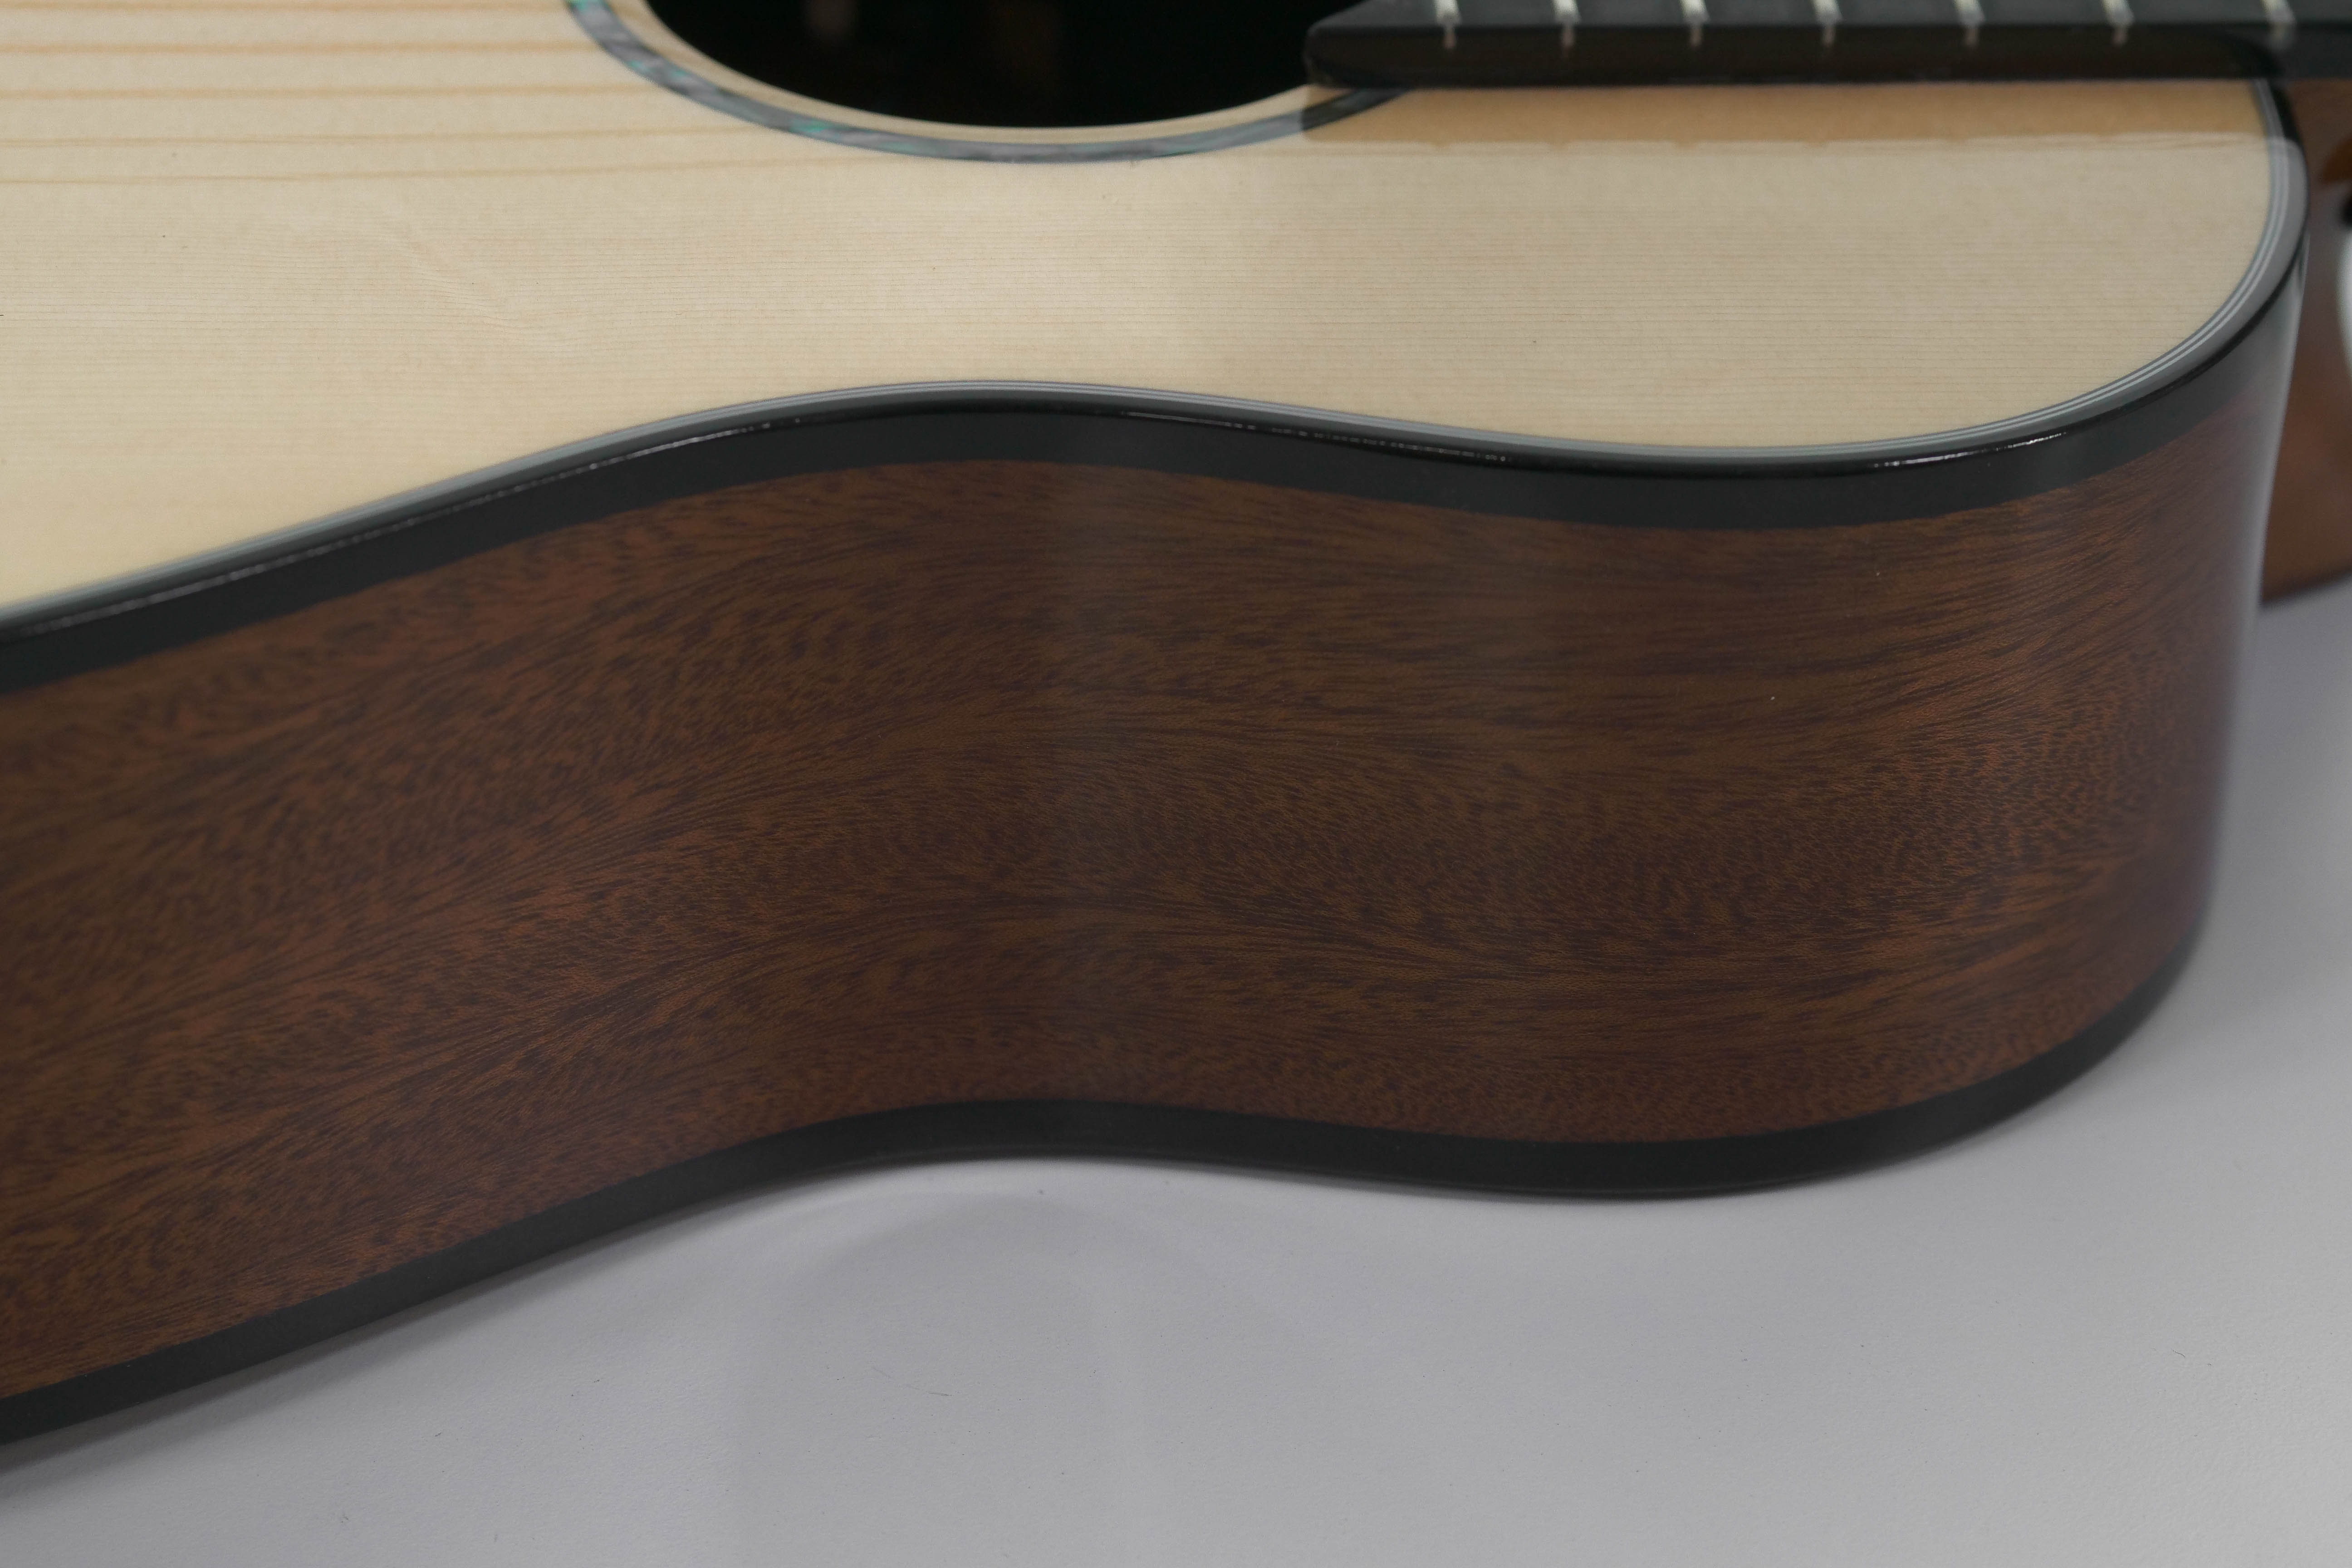 Romero Creations RC-B6-S-SM Baritone Guitar